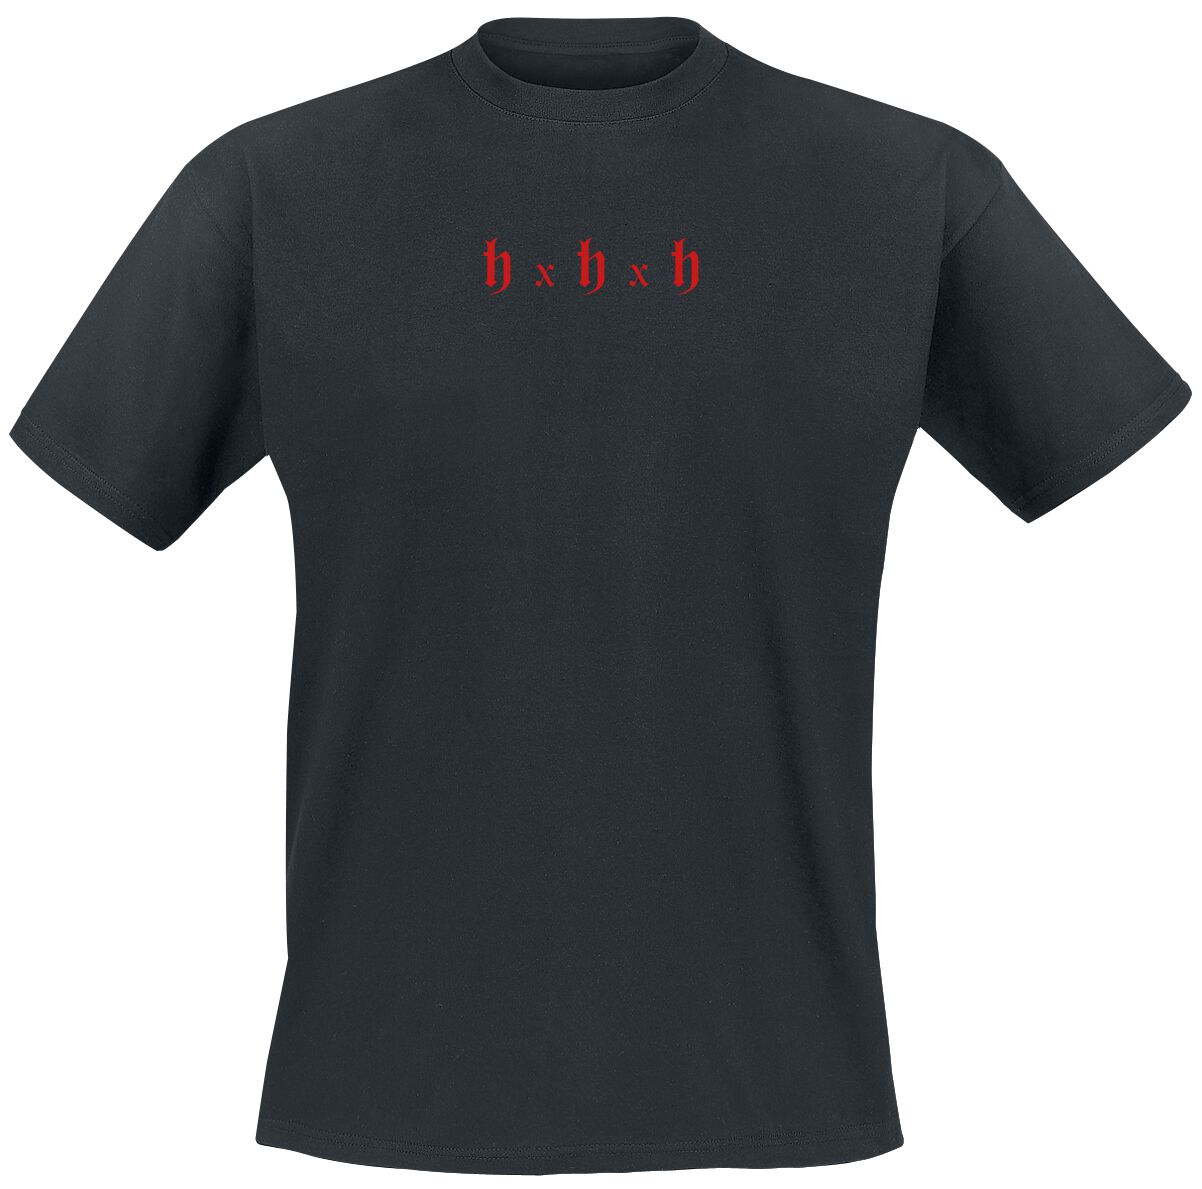 Heartless Human Harvest HxHxH T-Shirt black